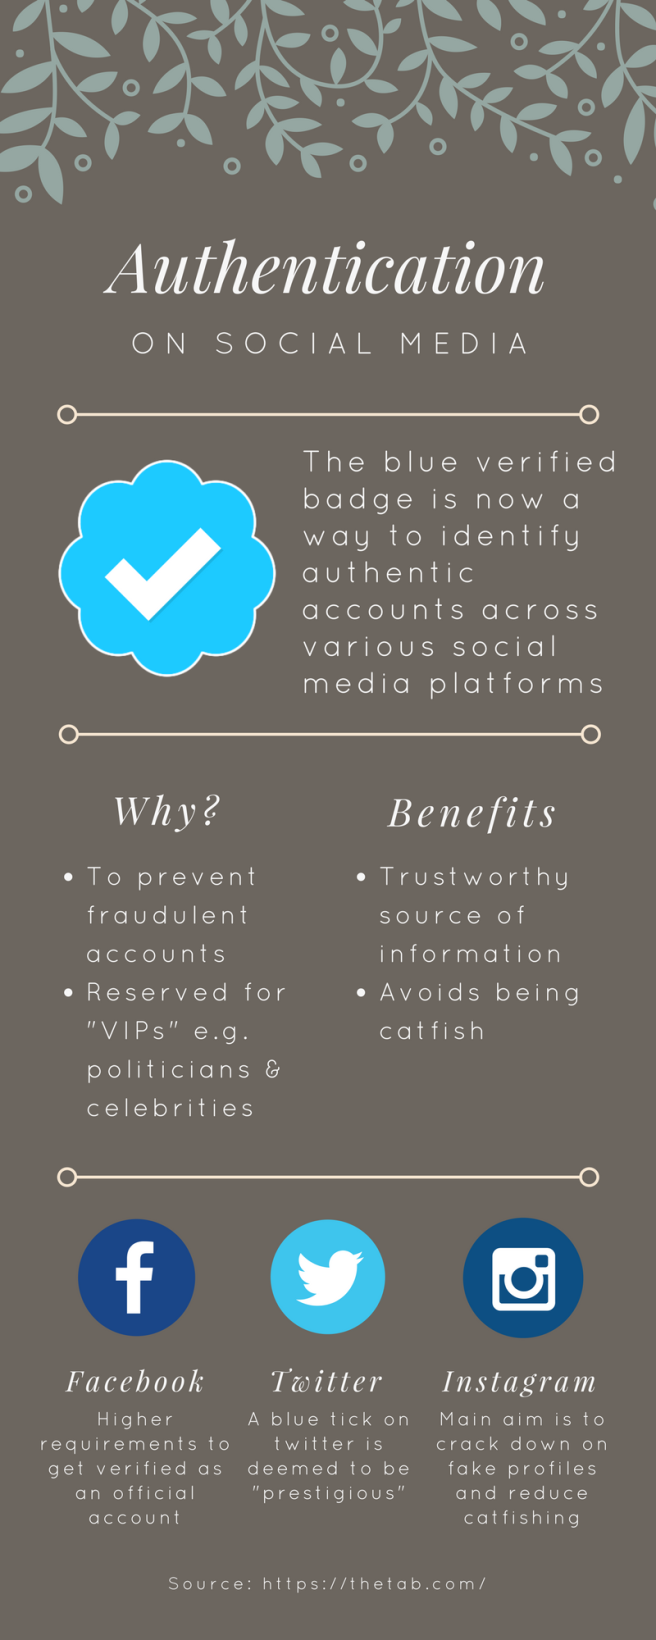 How social media authenticate accounts